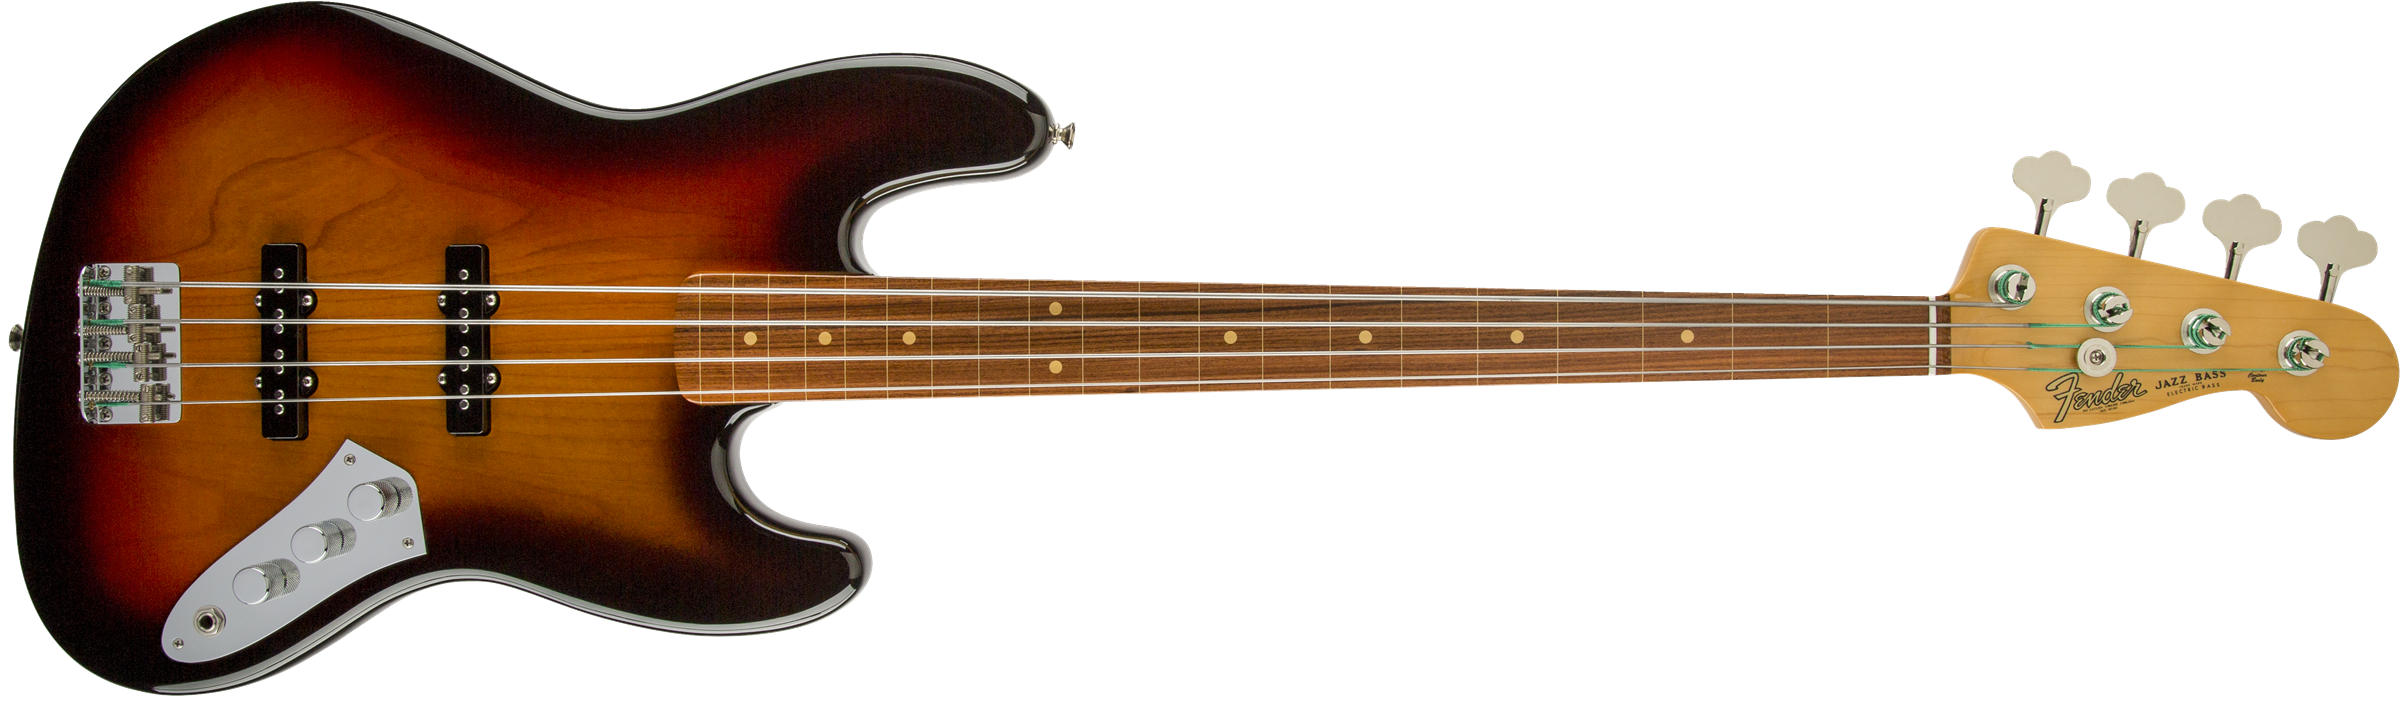 Fender Artistシリーズ ジャズベースJaco Pastorius Jazz Bass